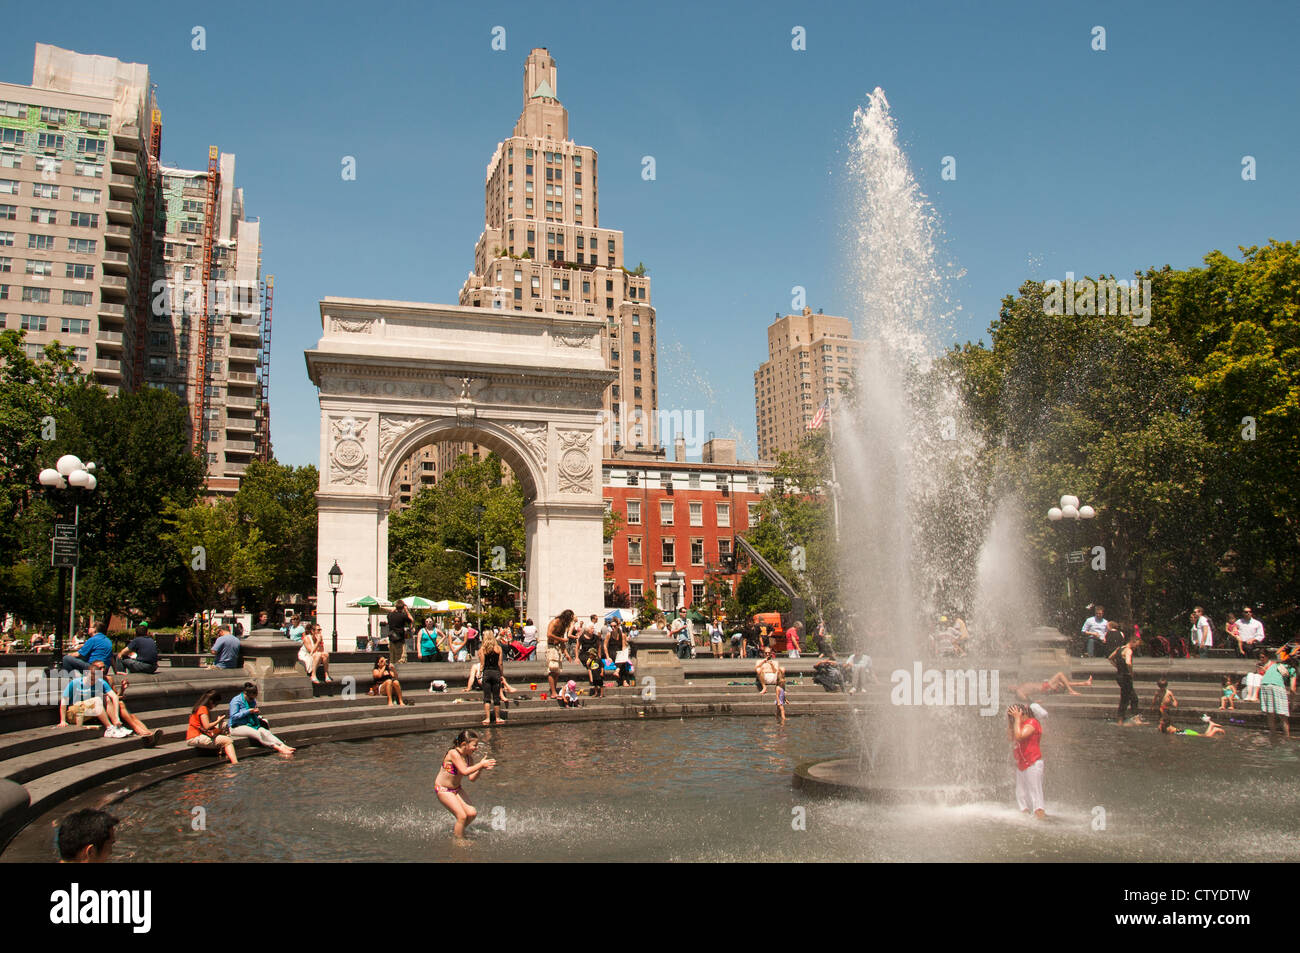 Washington Square Park West Village ( Greenwich ) Manhattan New York United States of America Stock Photo